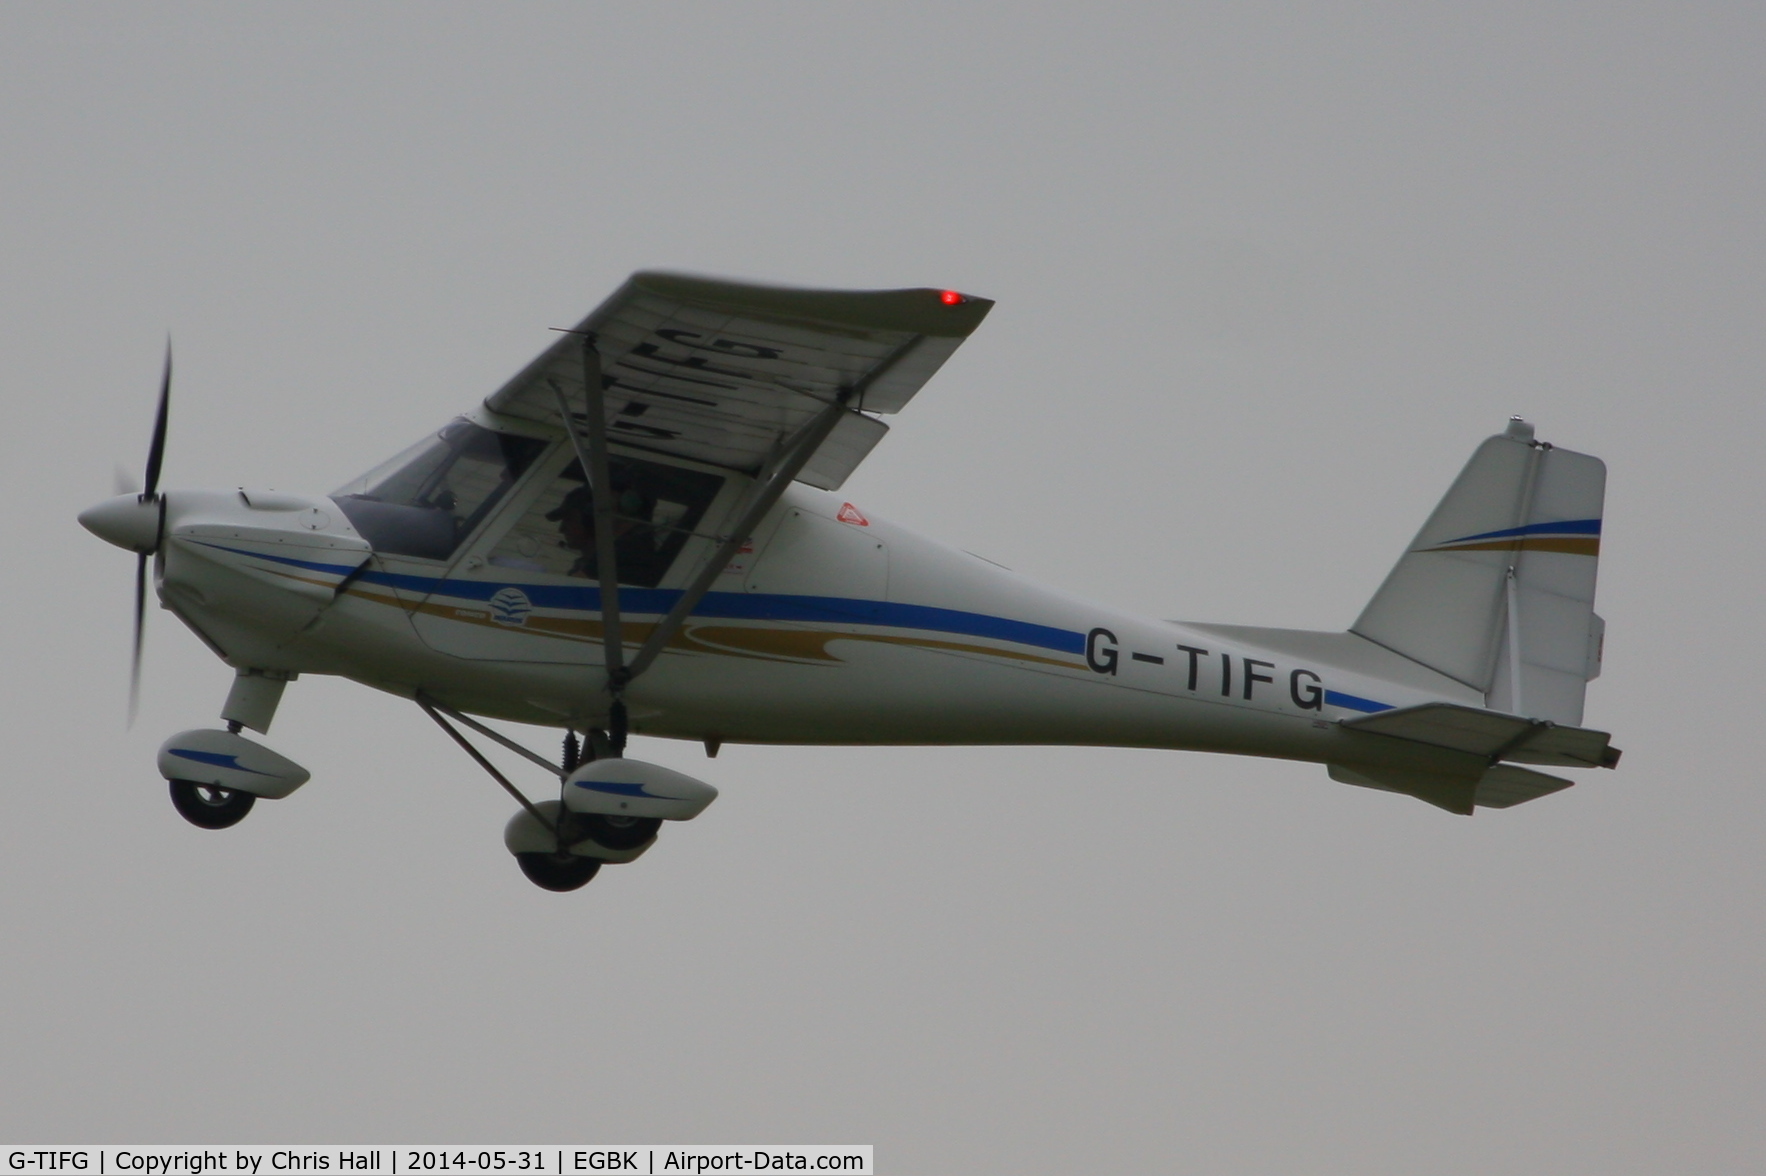 G-TIFG, 2010 Comco Ikarus C42 FB80 C/N 1009-7119, at AeroExpo 2014